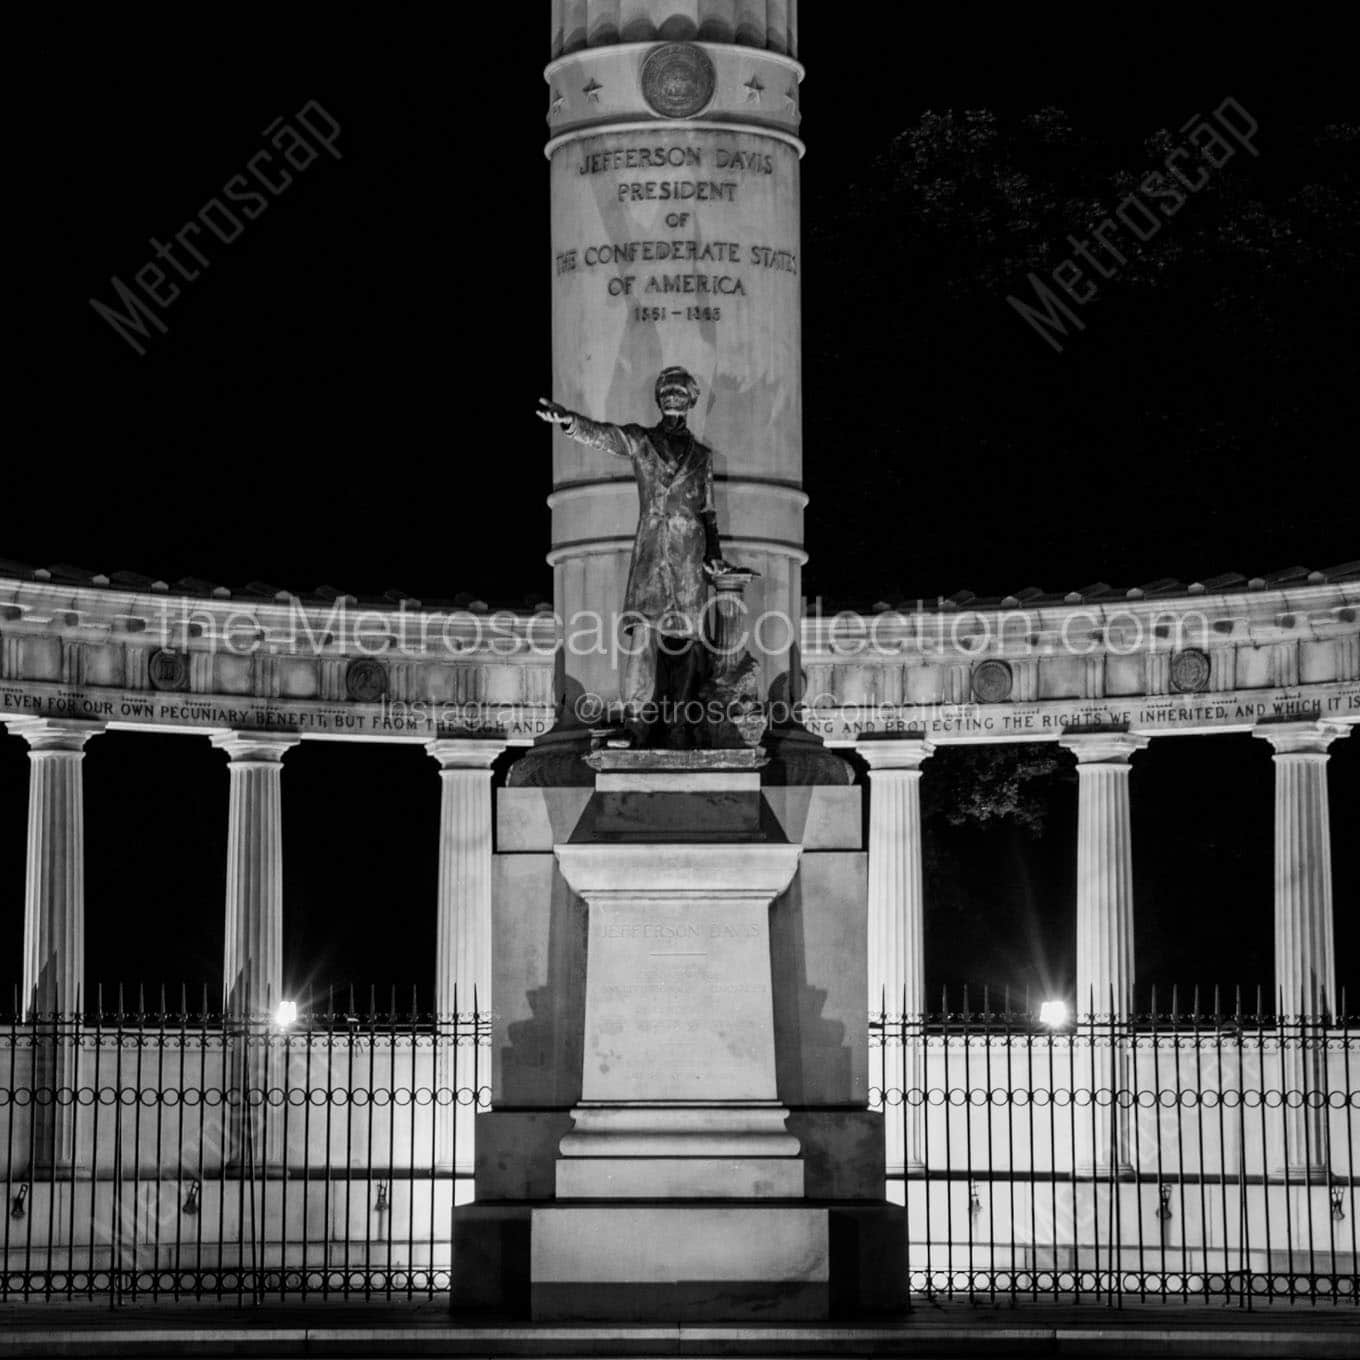 jefferson davis monument at night Black & White Wall Art